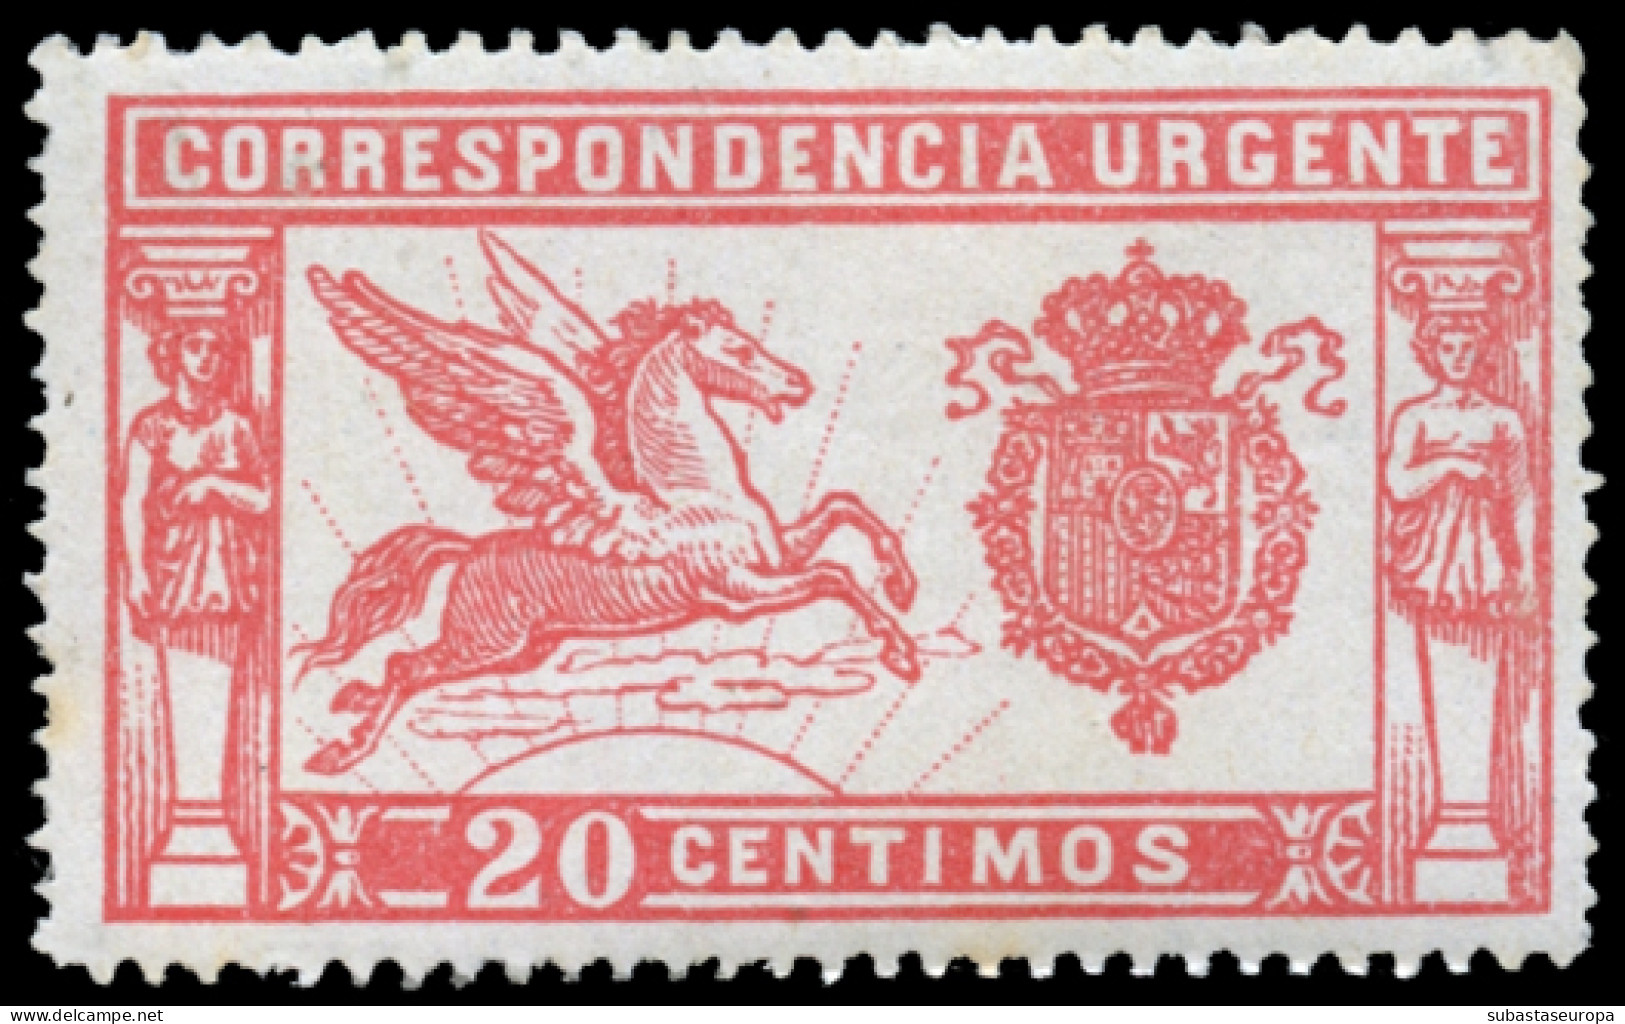 ** 256. Pegaso. Goma No Original. Aspecto De Lujo. Cat. +120 €. - Unused Stamps